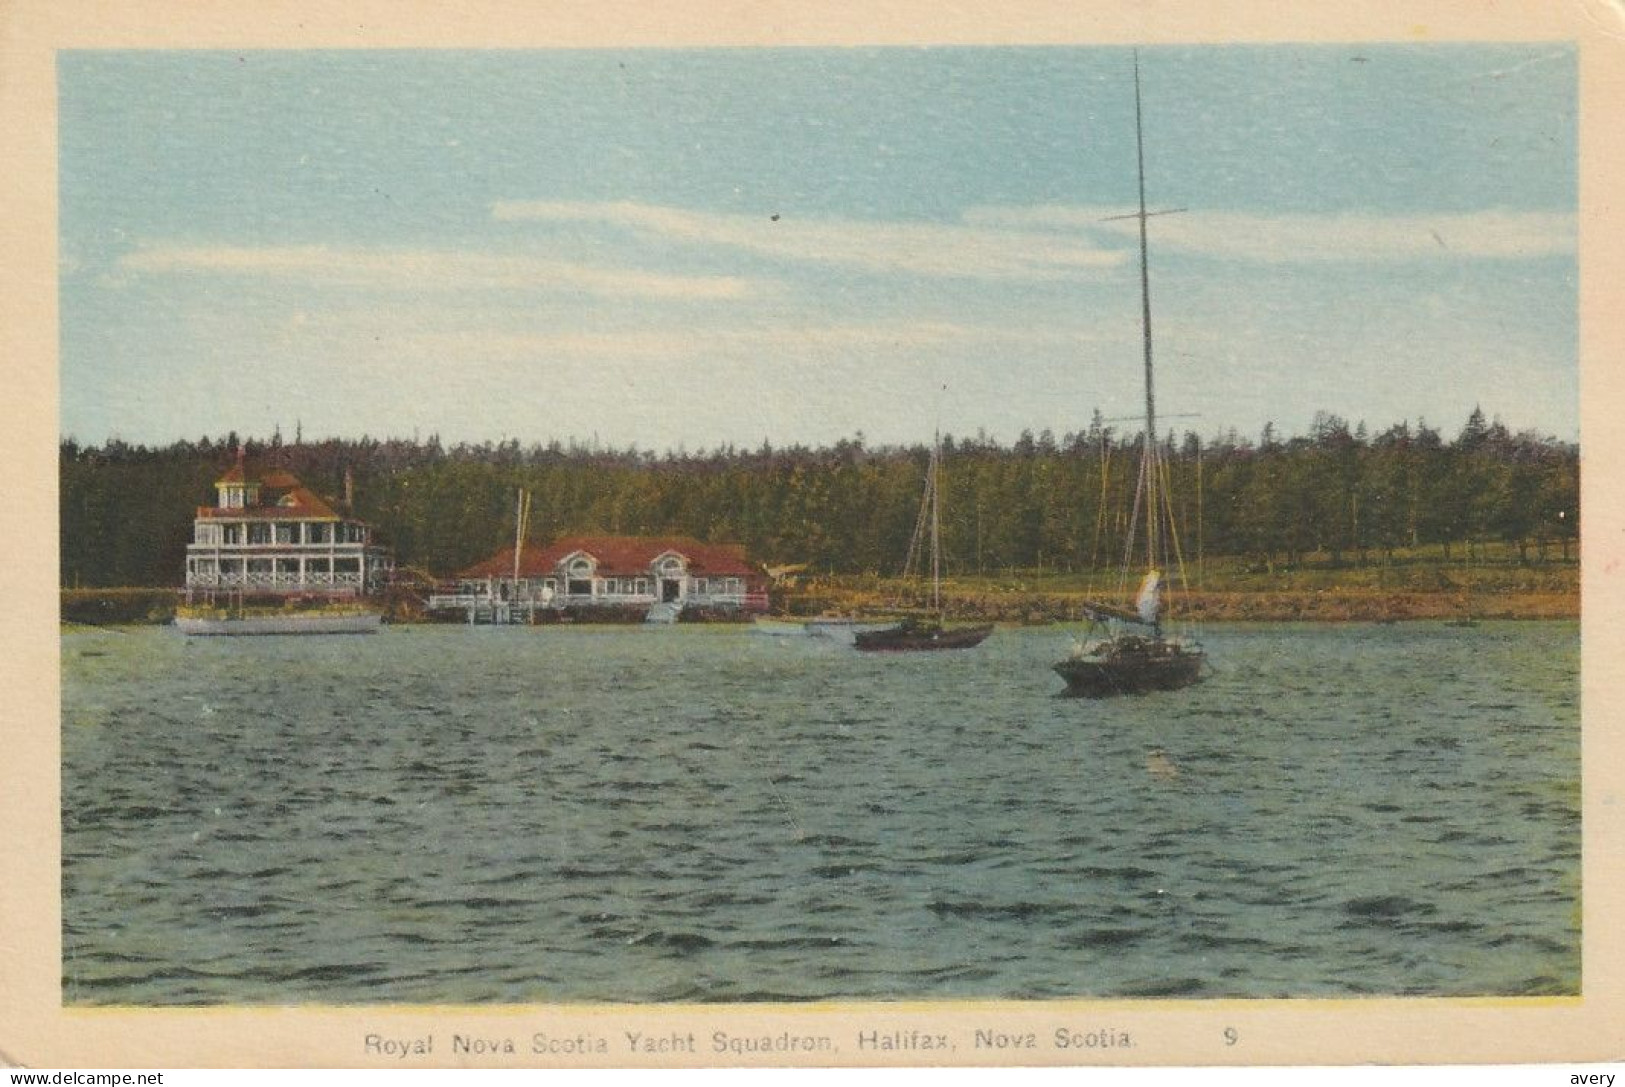 Royal Nova Scotia Yacht Squadron, Halifax, Nova Scotia - Halifax